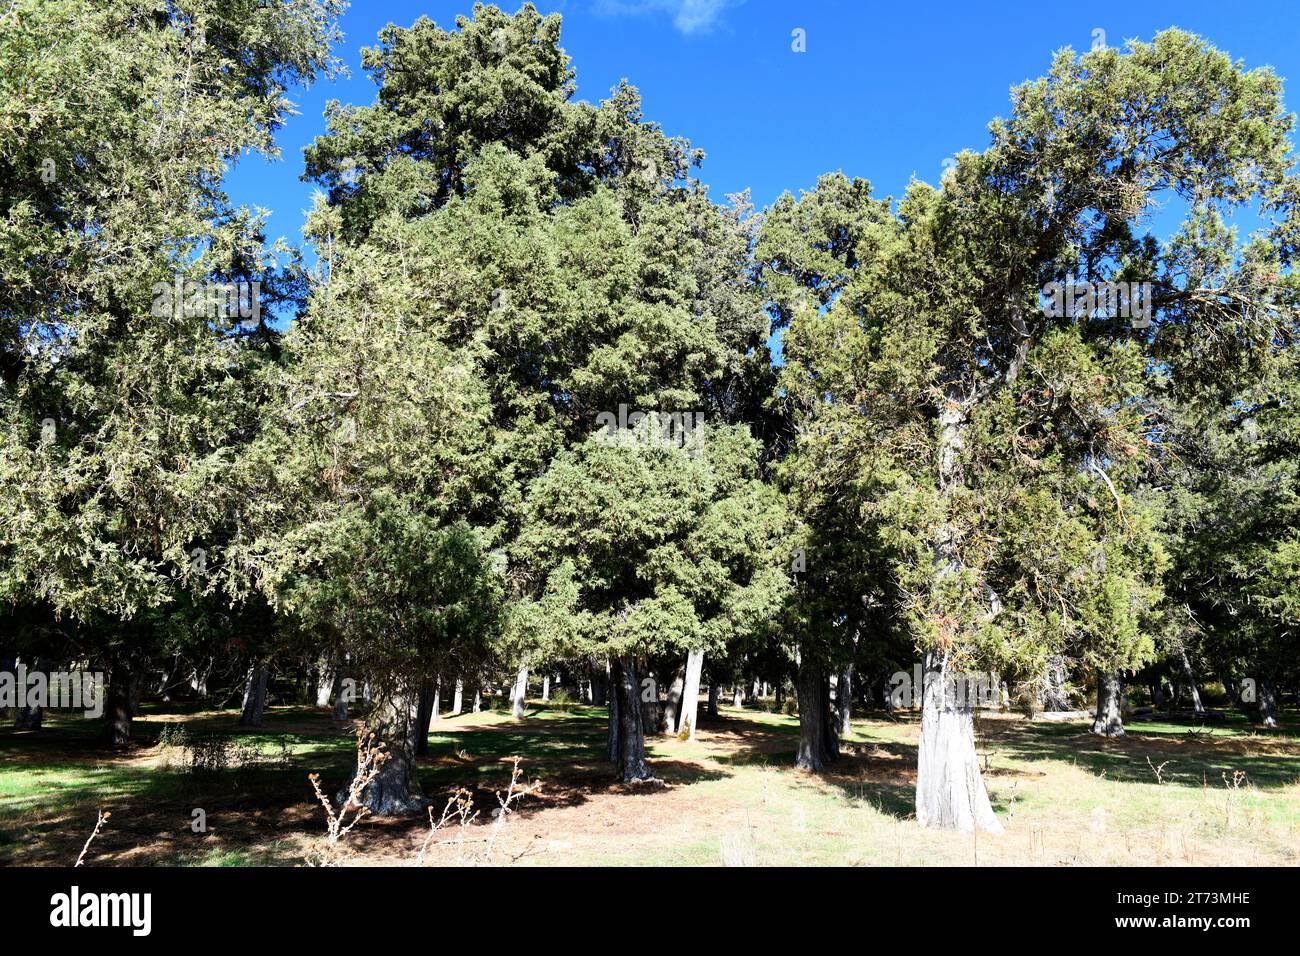 Spanish juniper (Juniperus thurifera) is an evergreen tree native to western Mediterranean mountains, specially in Spain. This photo was taken in Sabi Stock Photo